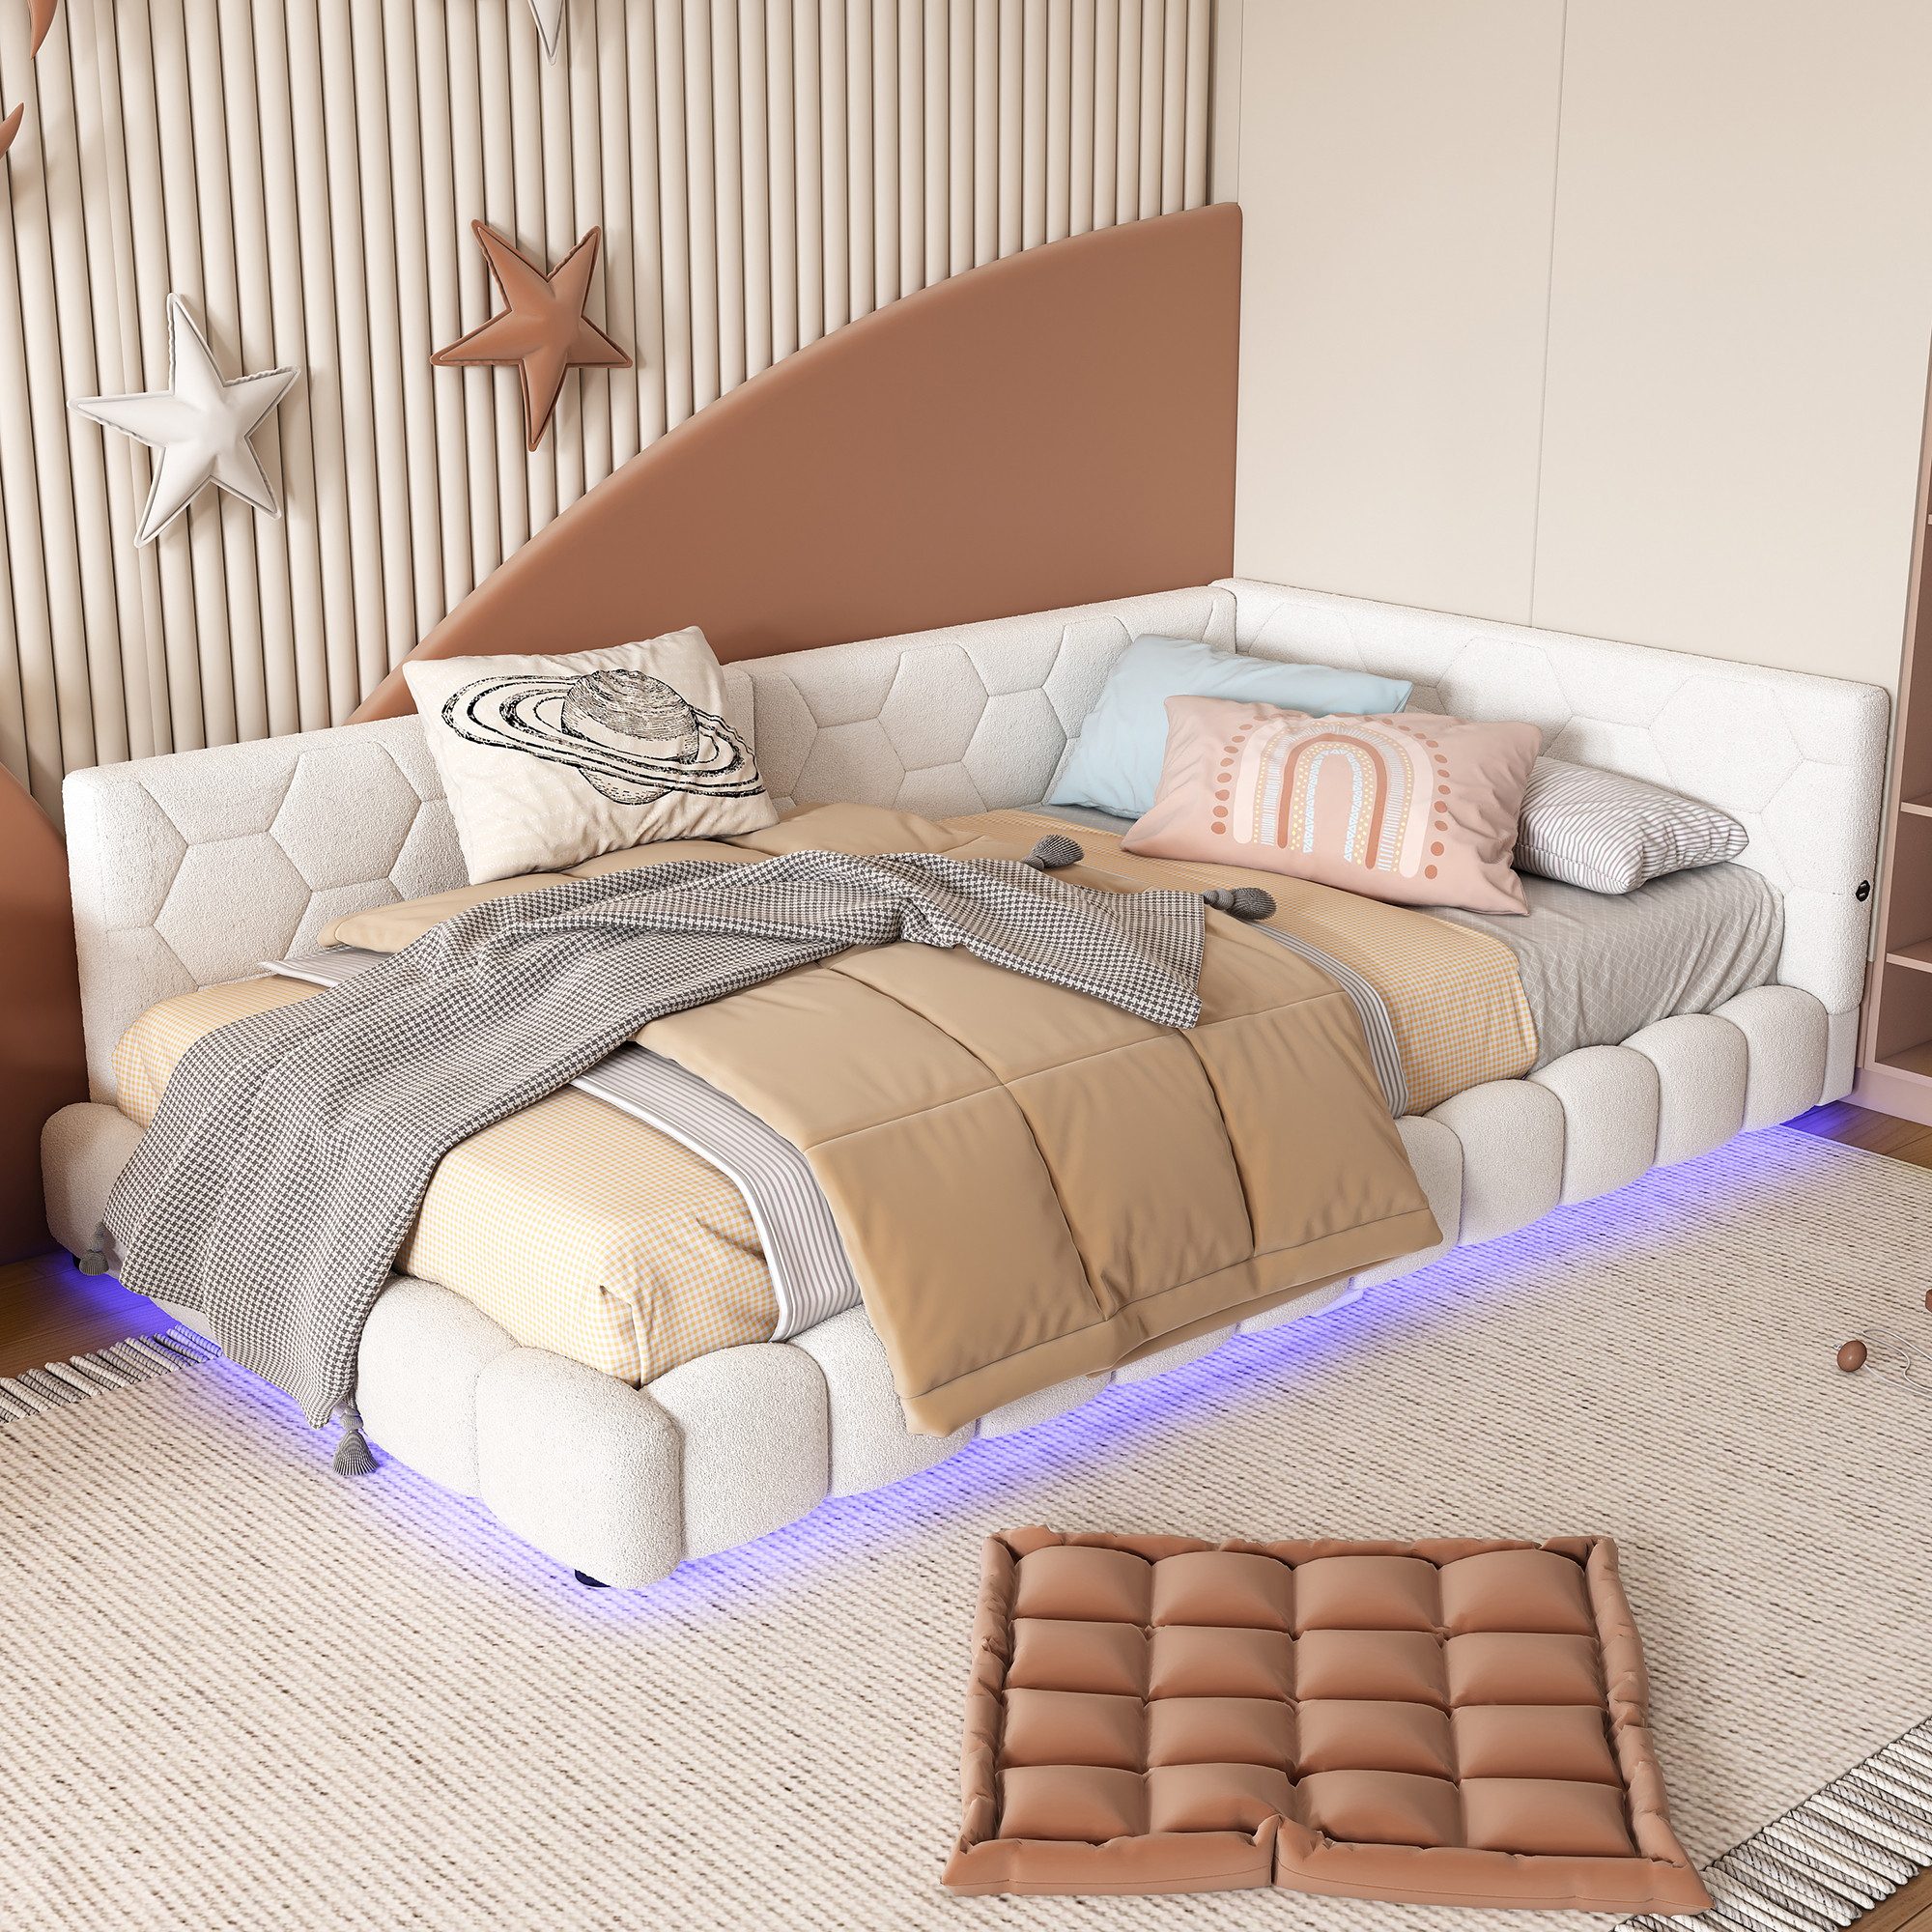 OKWISH Schlafsofa Kinderbett,16 Farben Umgebungslicht, USB-Anschluss, Bequemes Material, 90*200cm, ohne Matratze